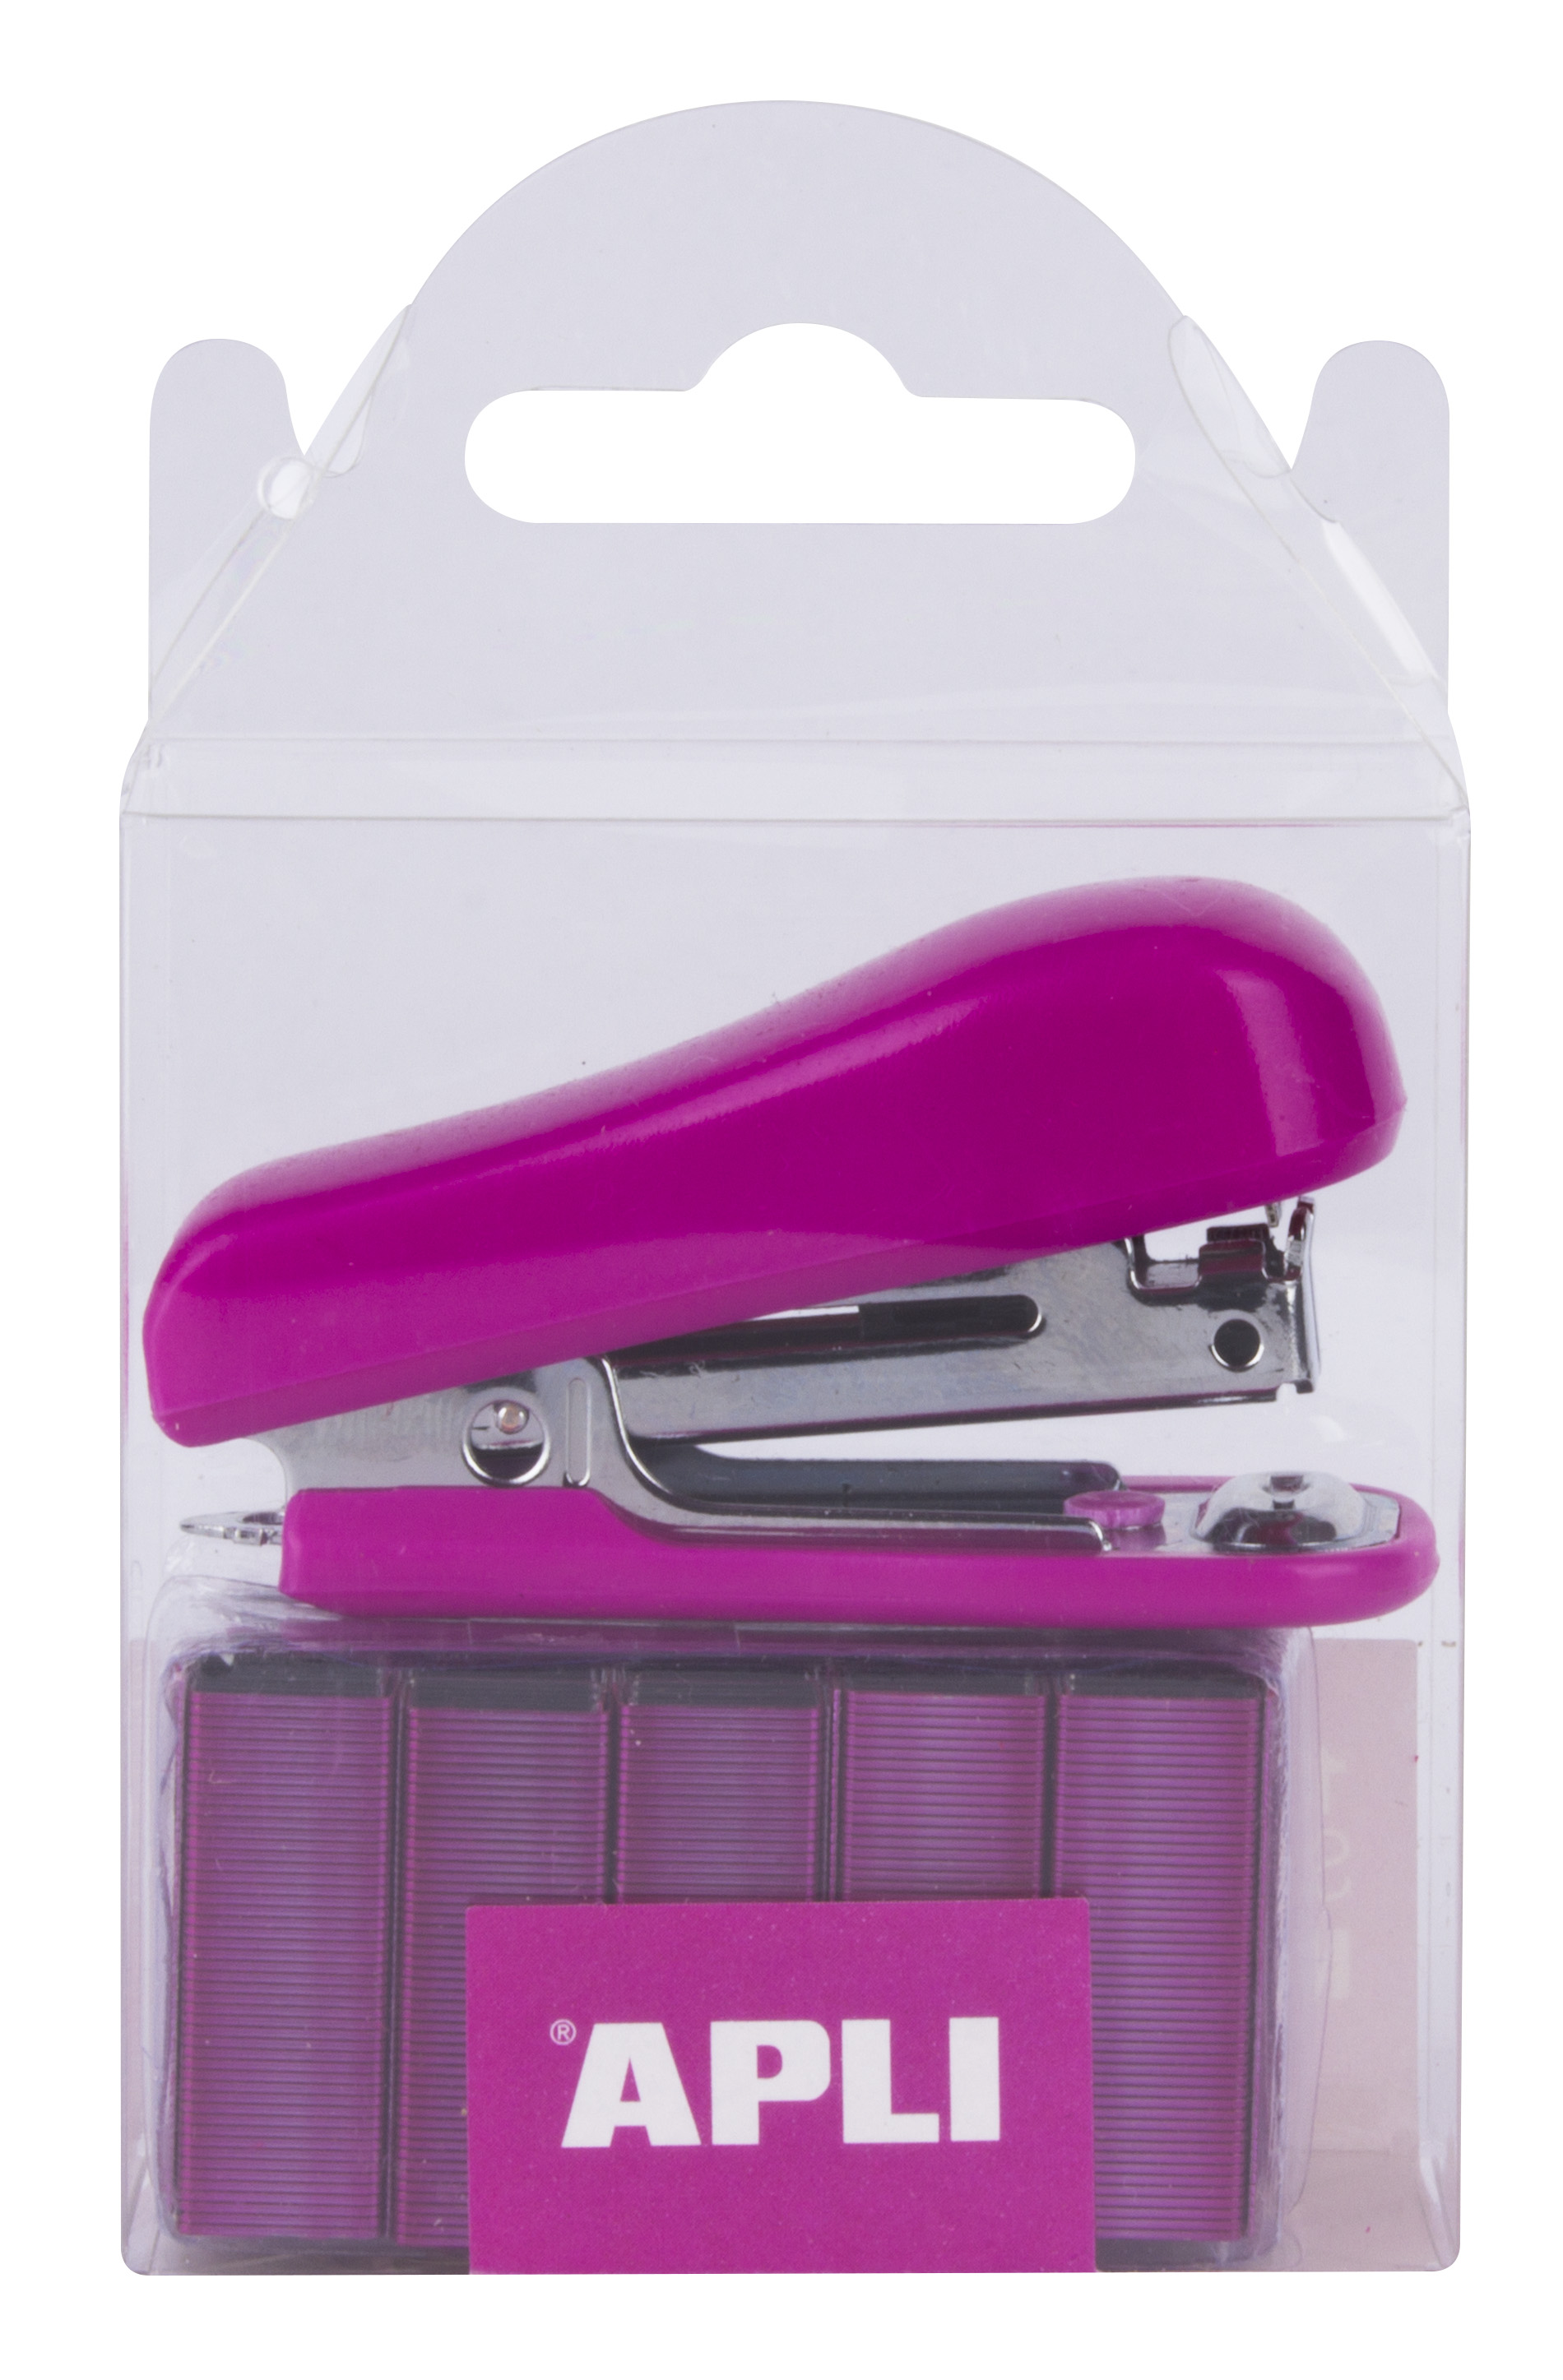 LOT de 5 Apli Pink Pocket Agrafeuse - Taille des agrafes 56 mm